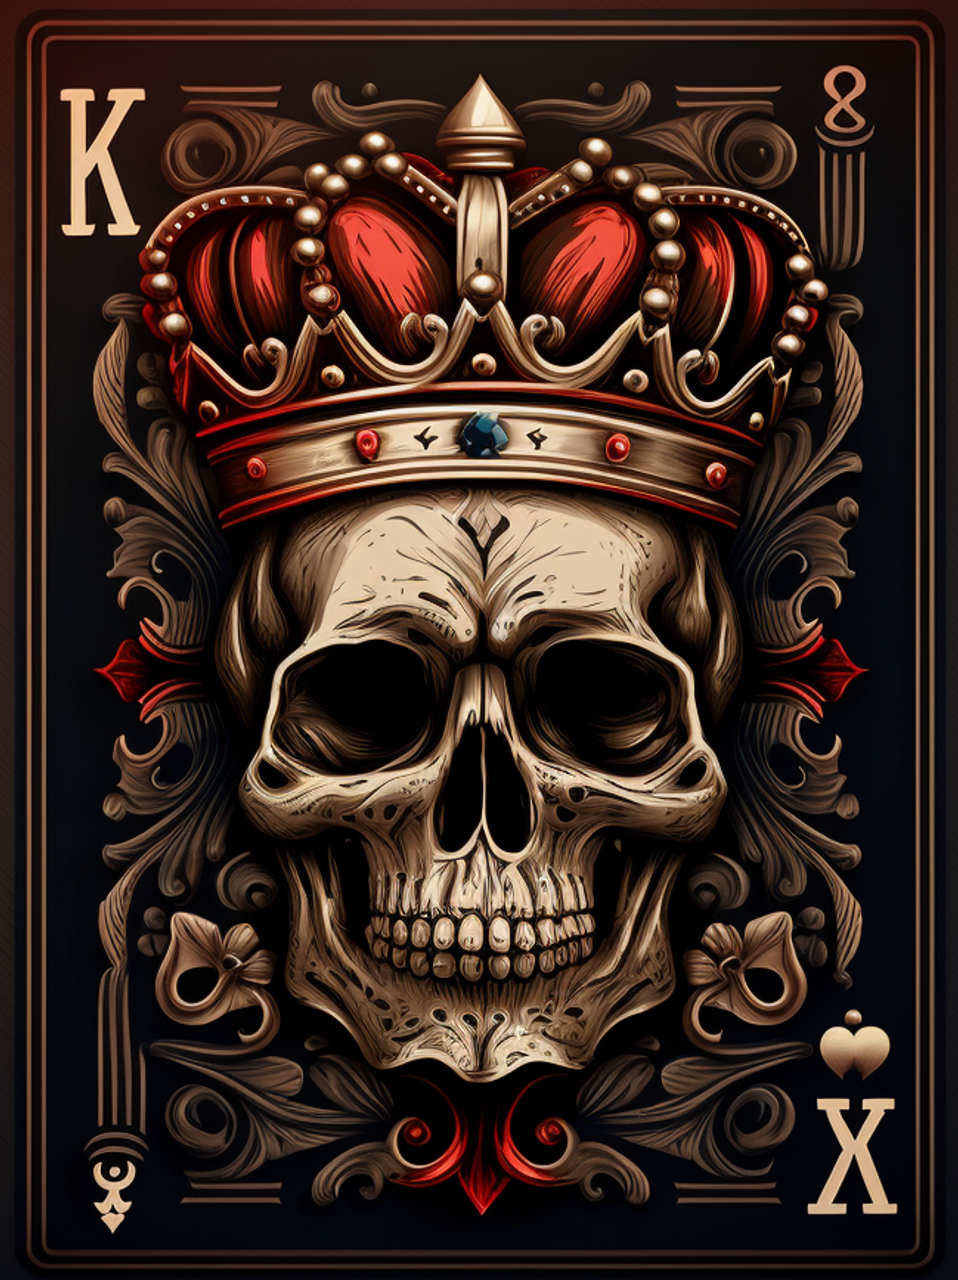 5D Diamond Painting Skull King Card Kit